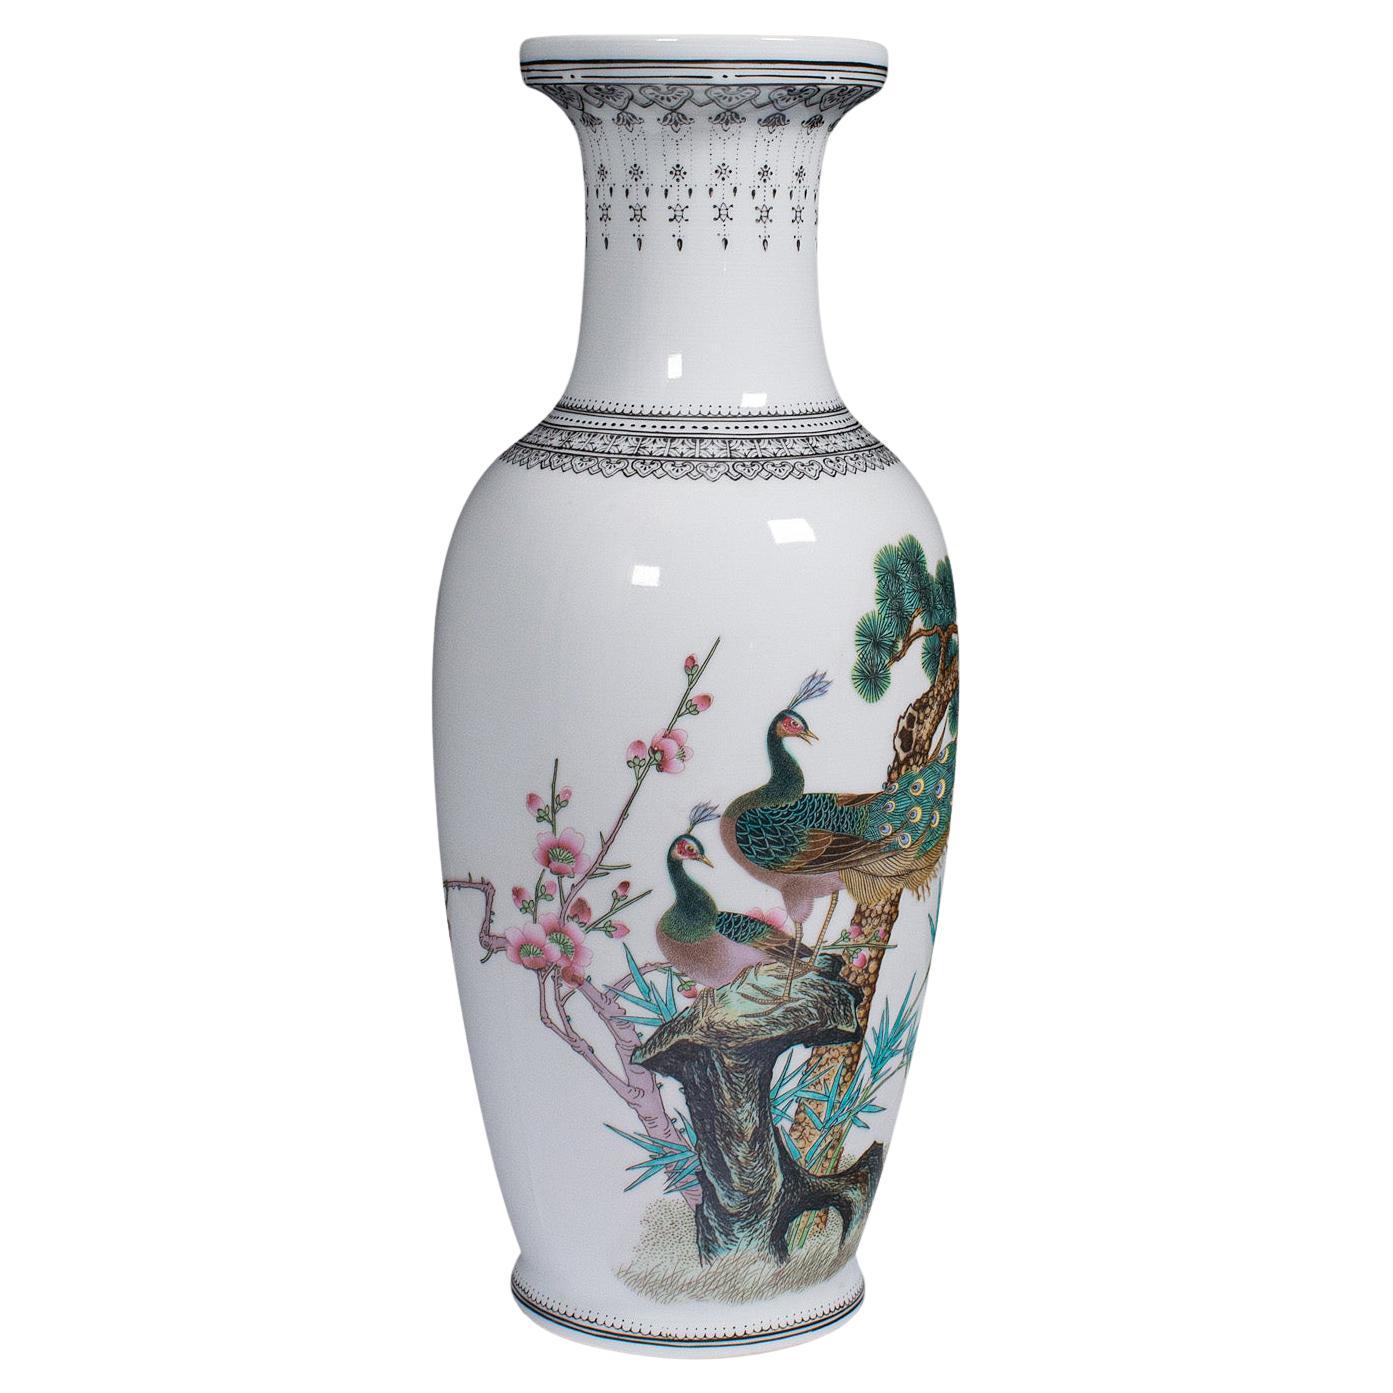 Vintage Decorative Posy Vase, Chinese, Ceramic Flower Urn, Peacock Motif, C.1960 For Sale